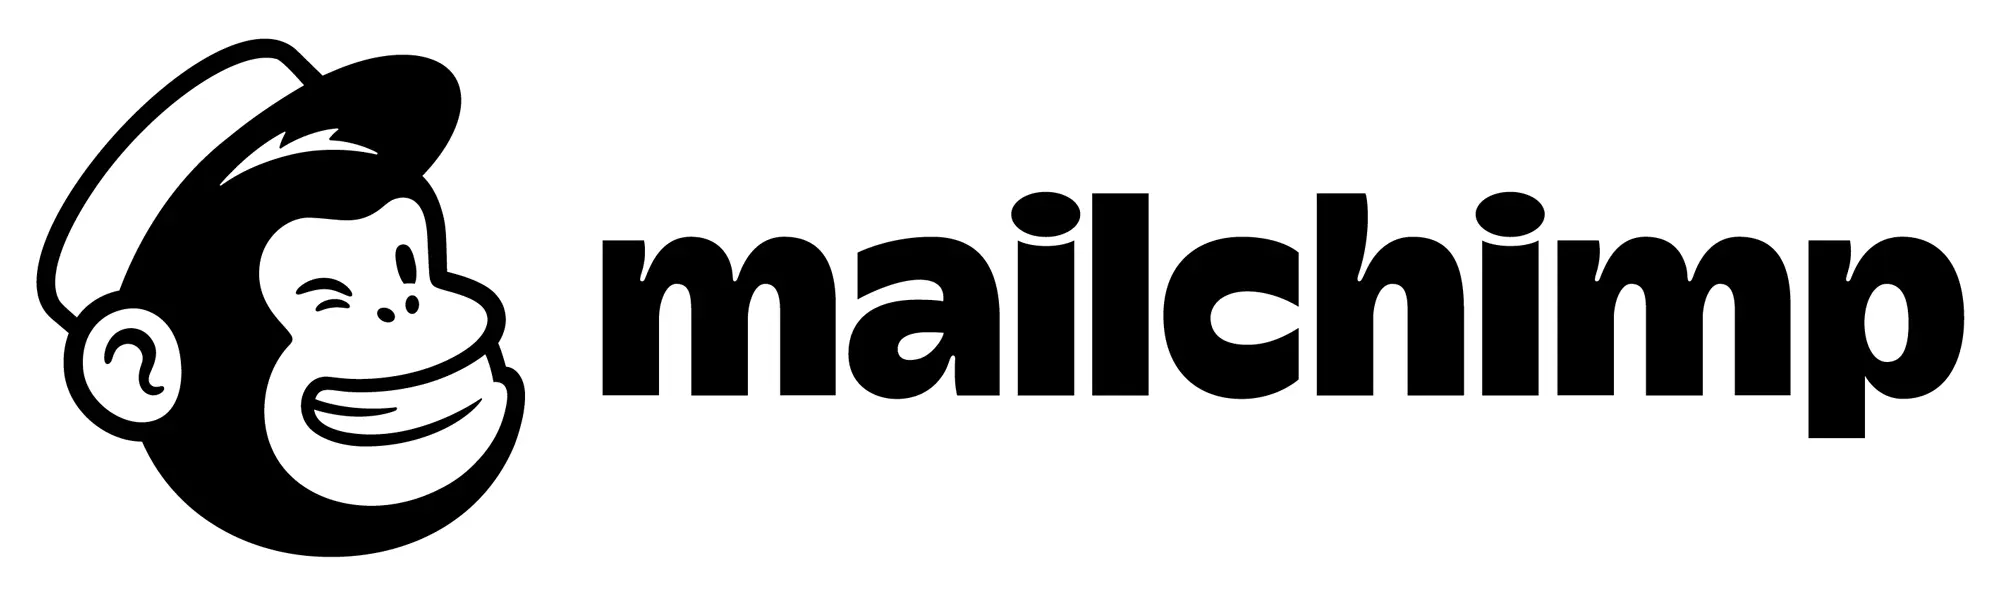 mailchimp logo - Top email marketing software